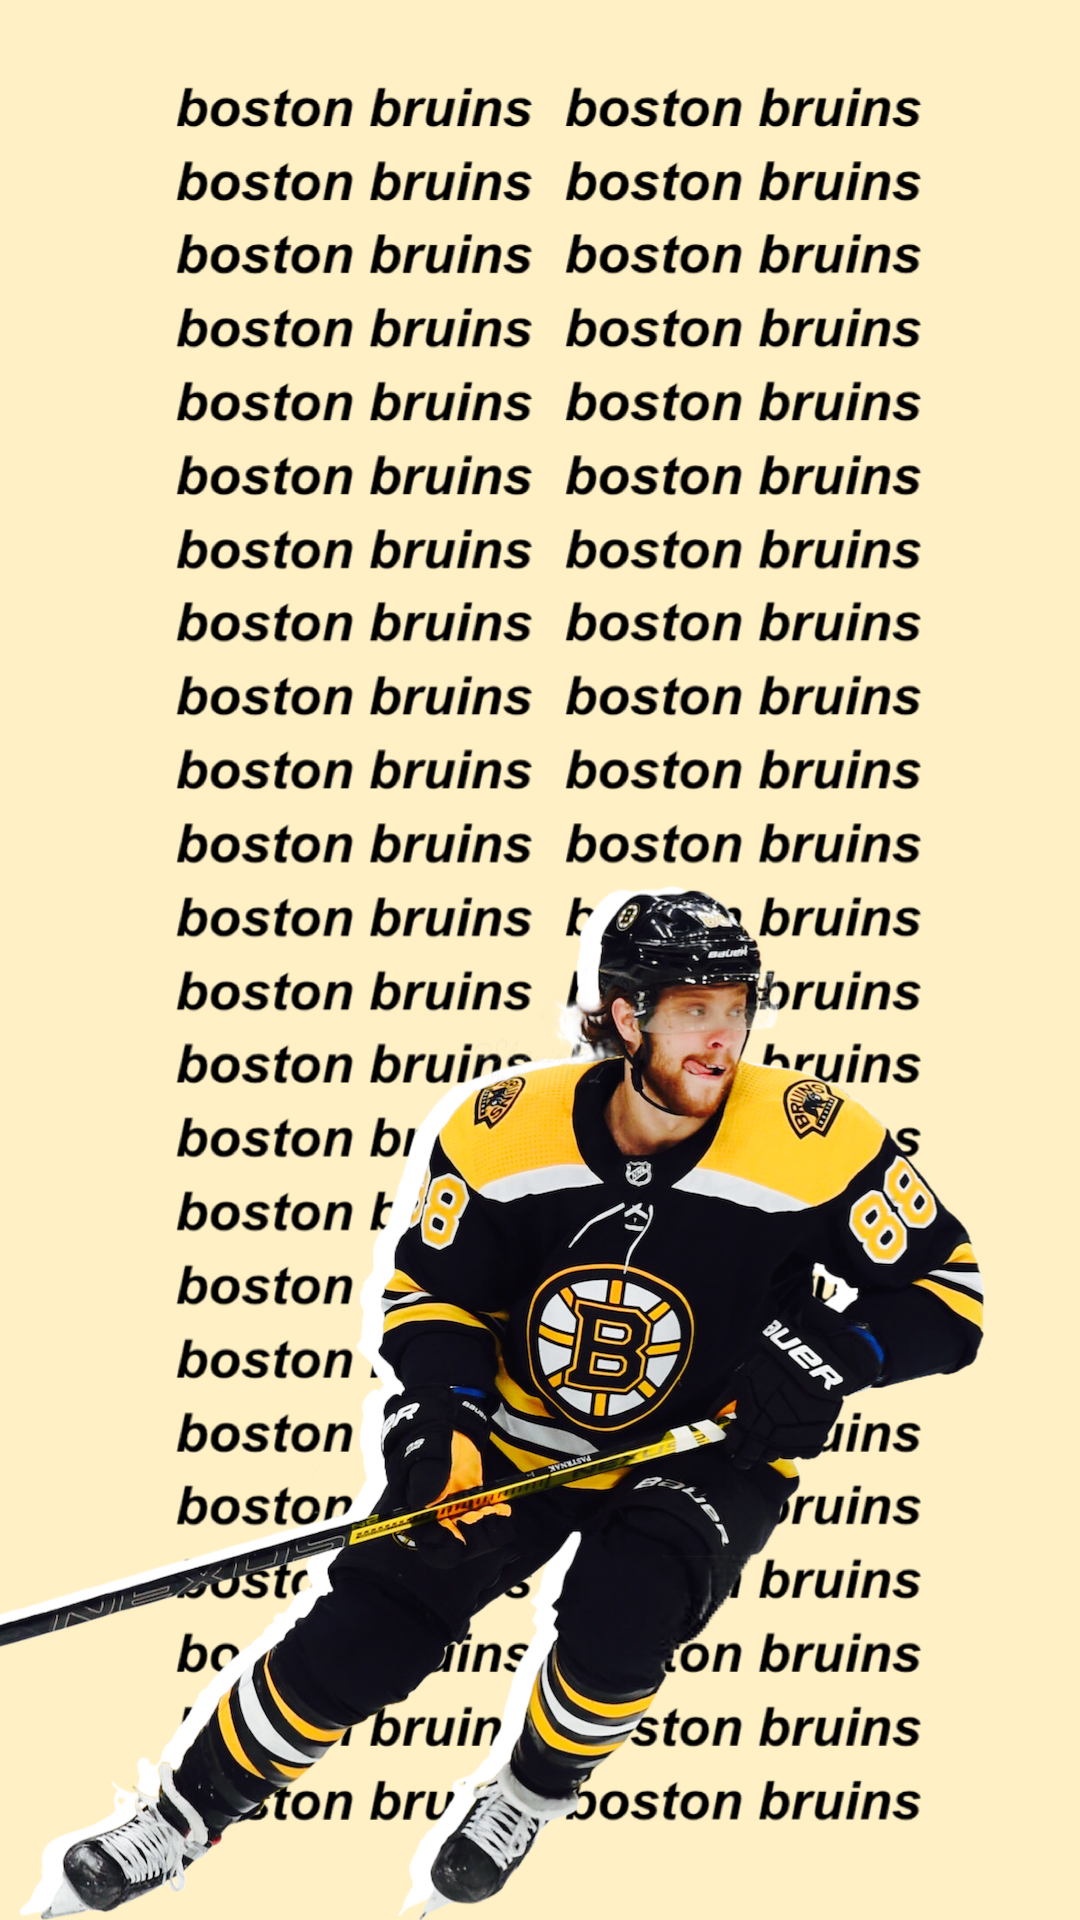 Download David Pastrnak Boston Bruins Grizzly Bear Wallpaper